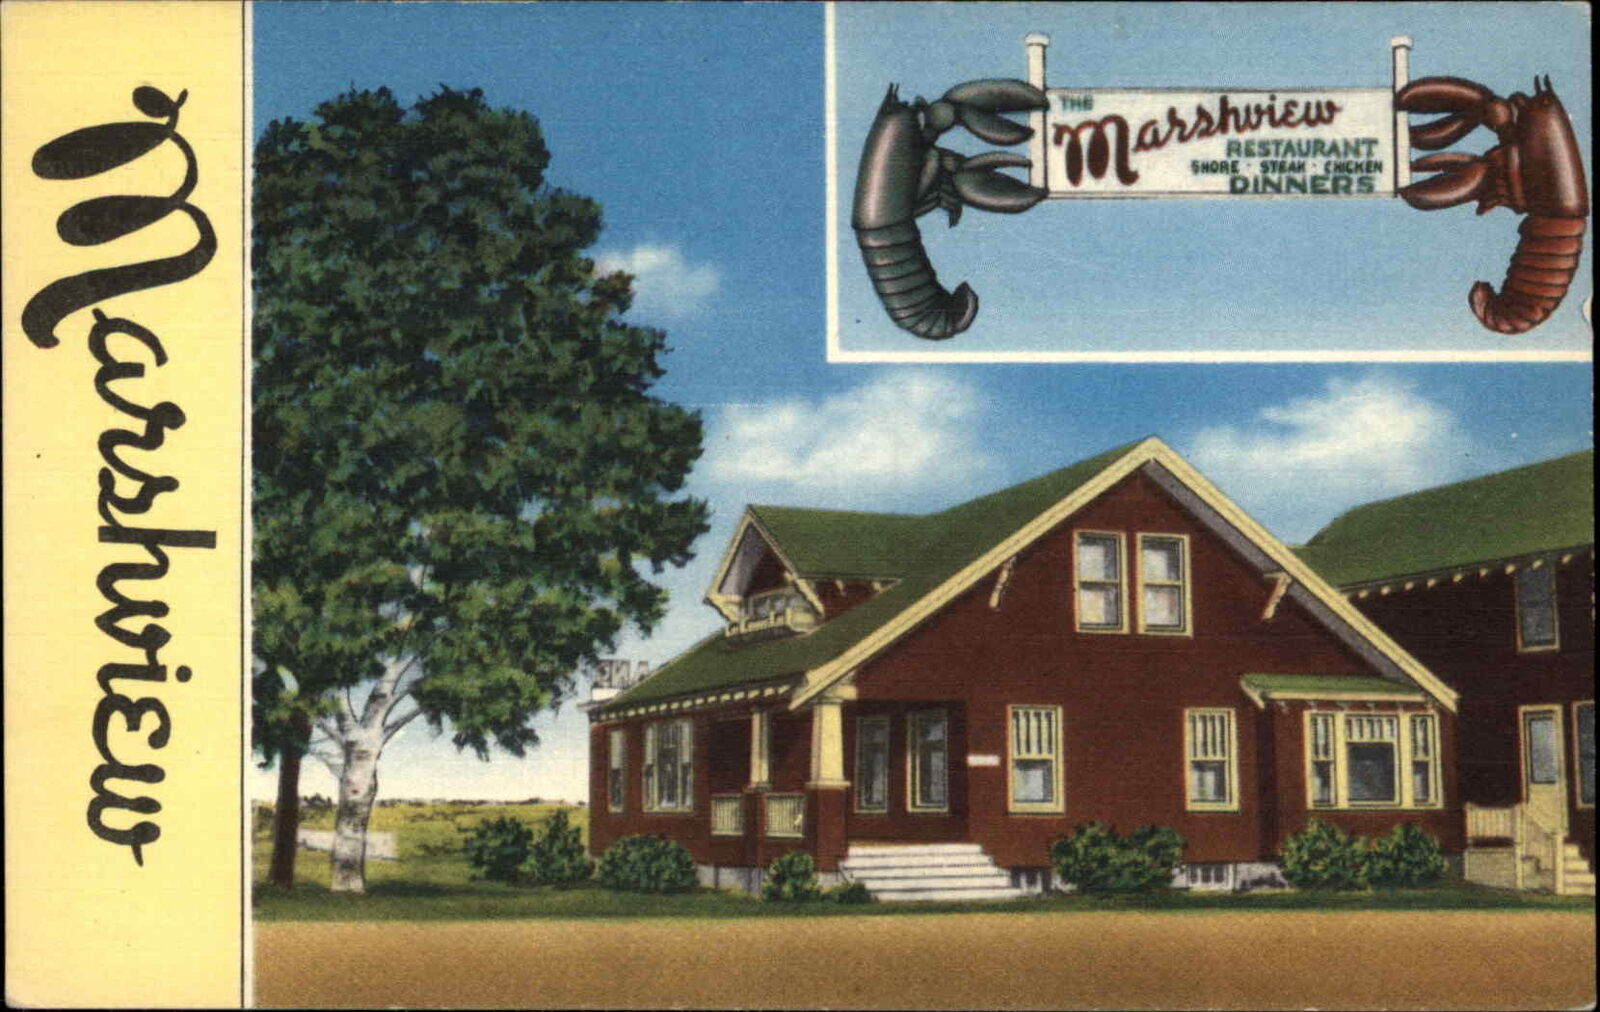 West Scarboro Maine ME Marshview Restaurant c1930s-50s Postcard